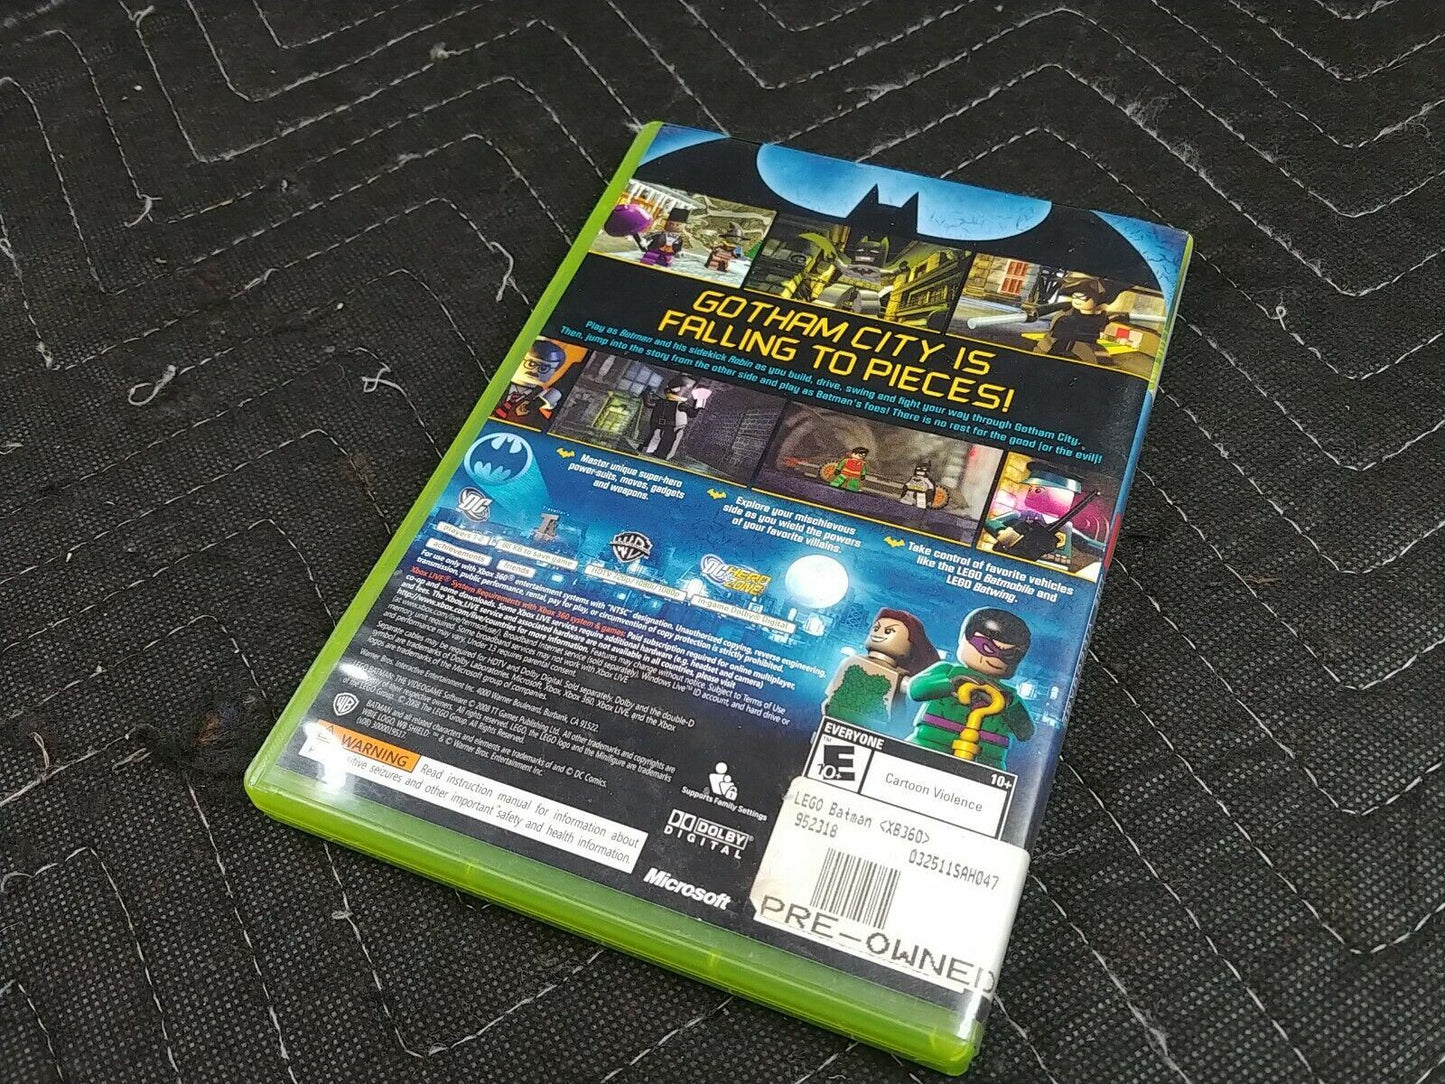 LEGO Batman: The Videogame (Microsoft Xbox 360, 2008)